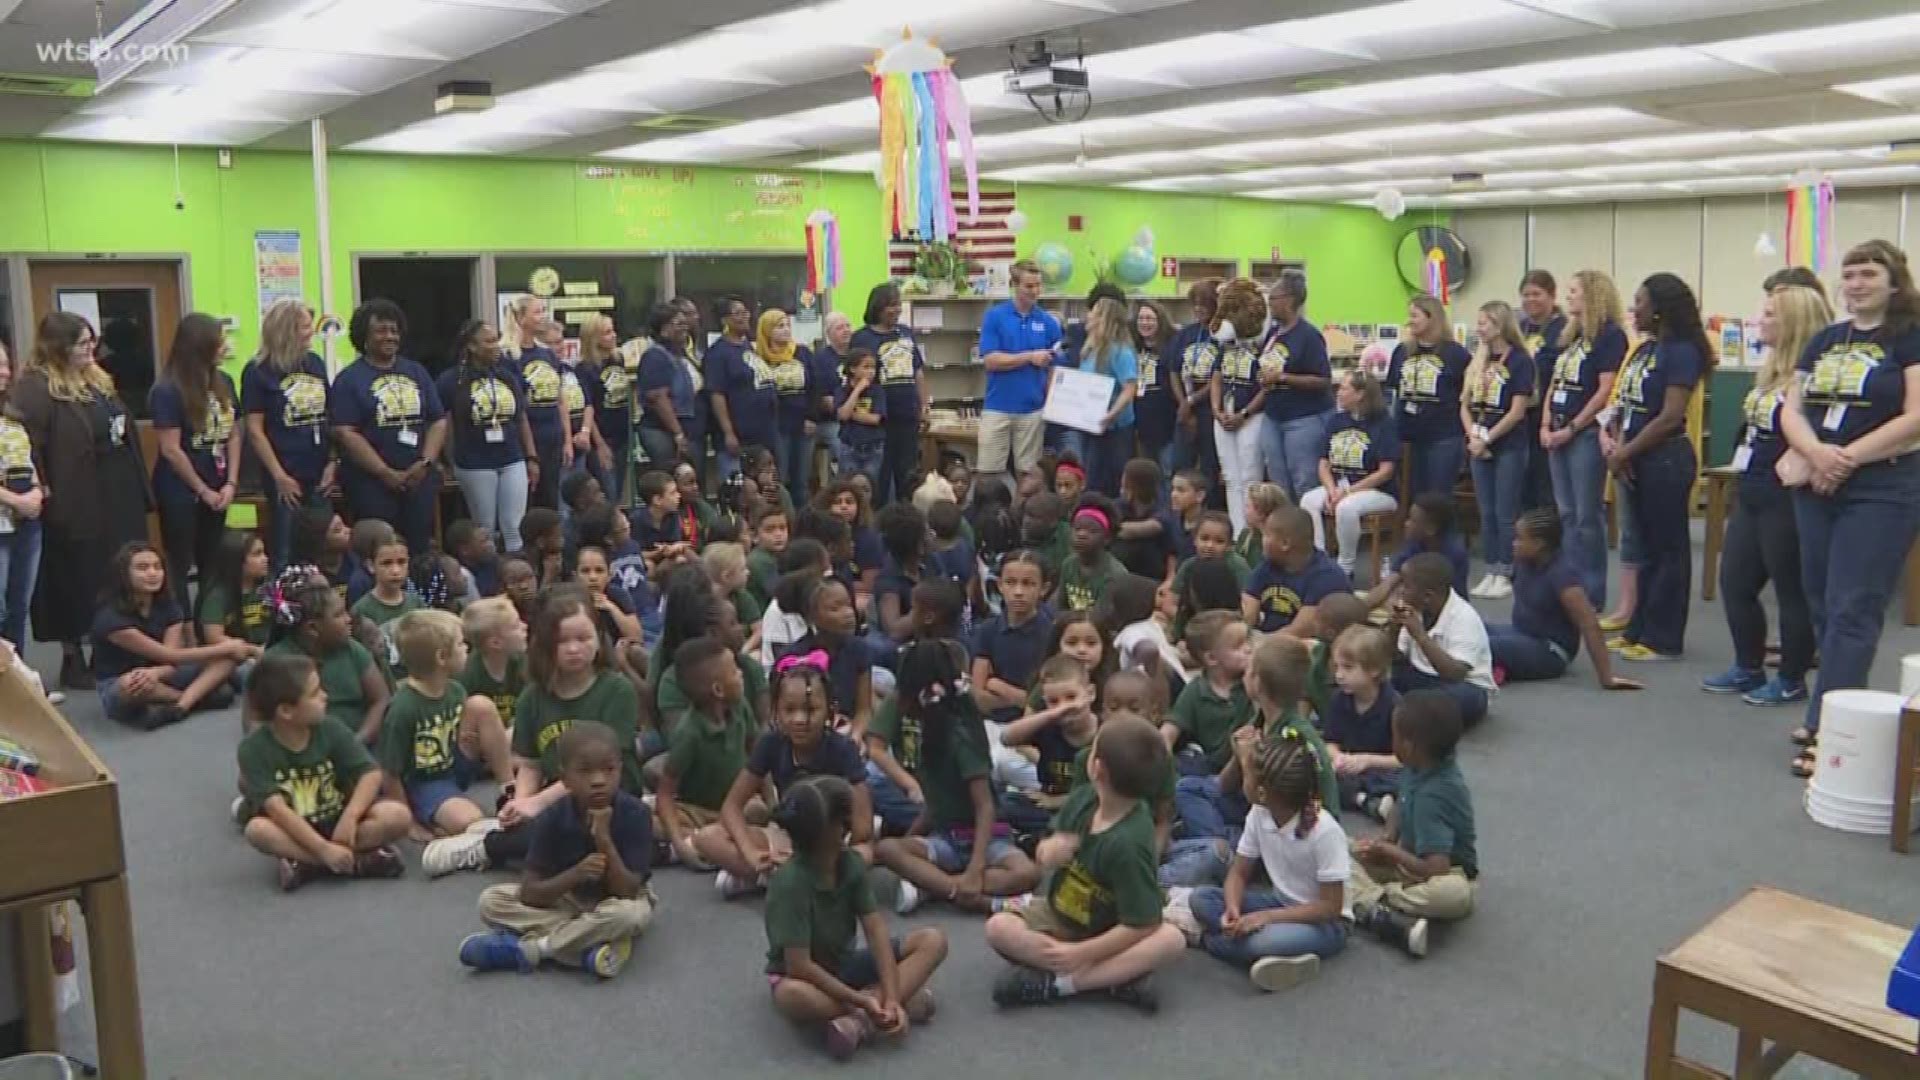 Duke Energy Florida presented a $1,000 check to Garner Elementary School. https://on.wtsp.com/2UY8exP